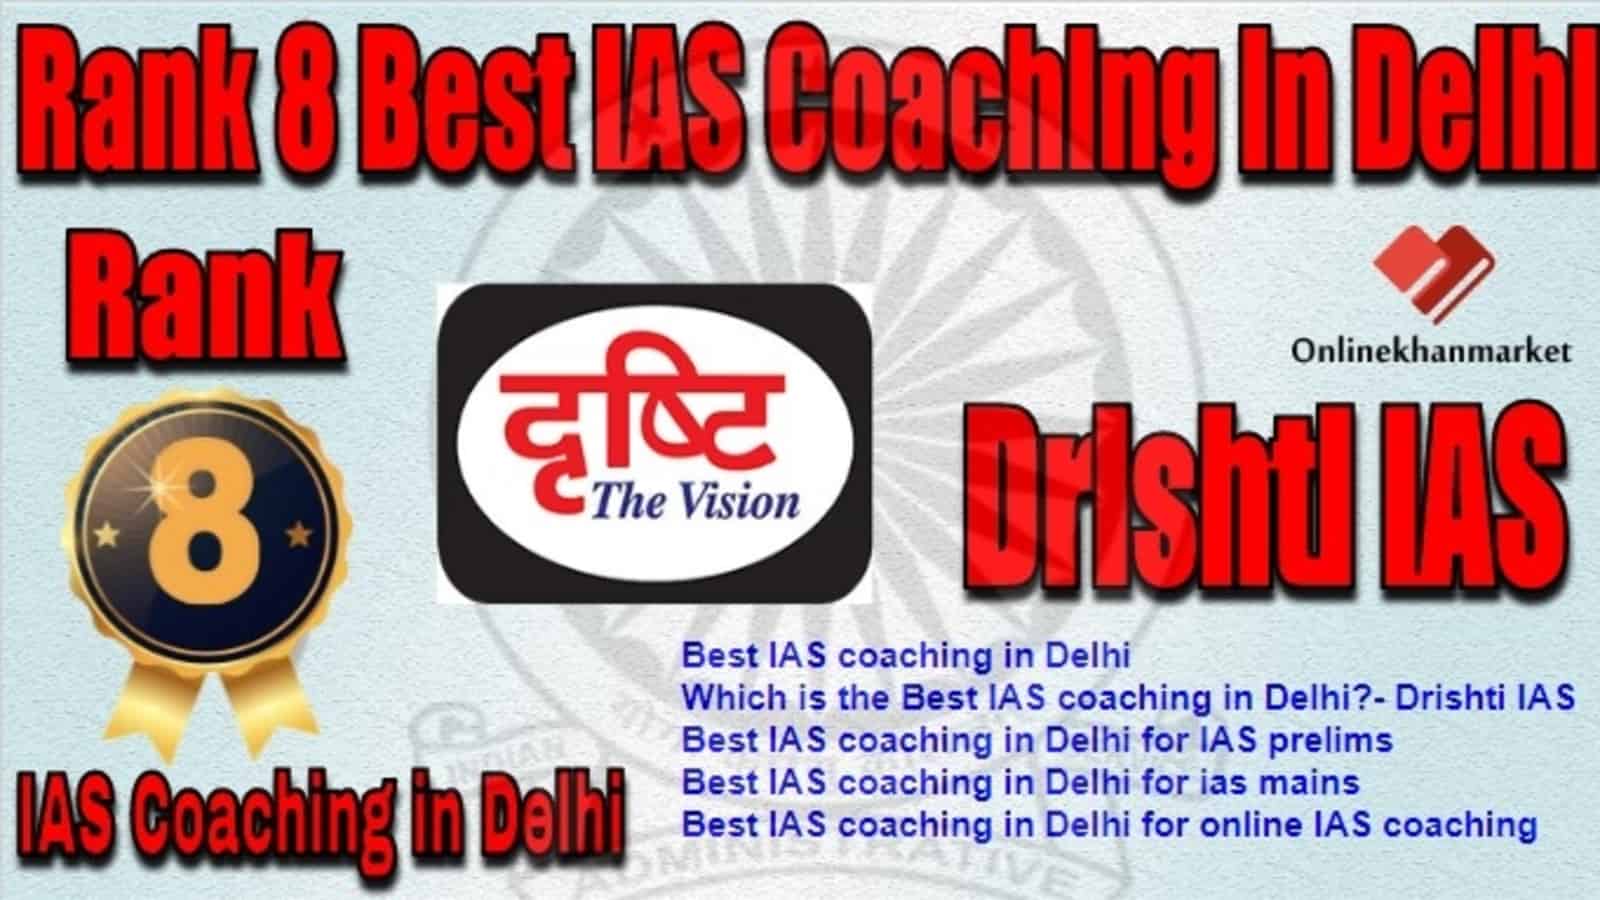 Rank 8 Best IAS Coaching in Delhi